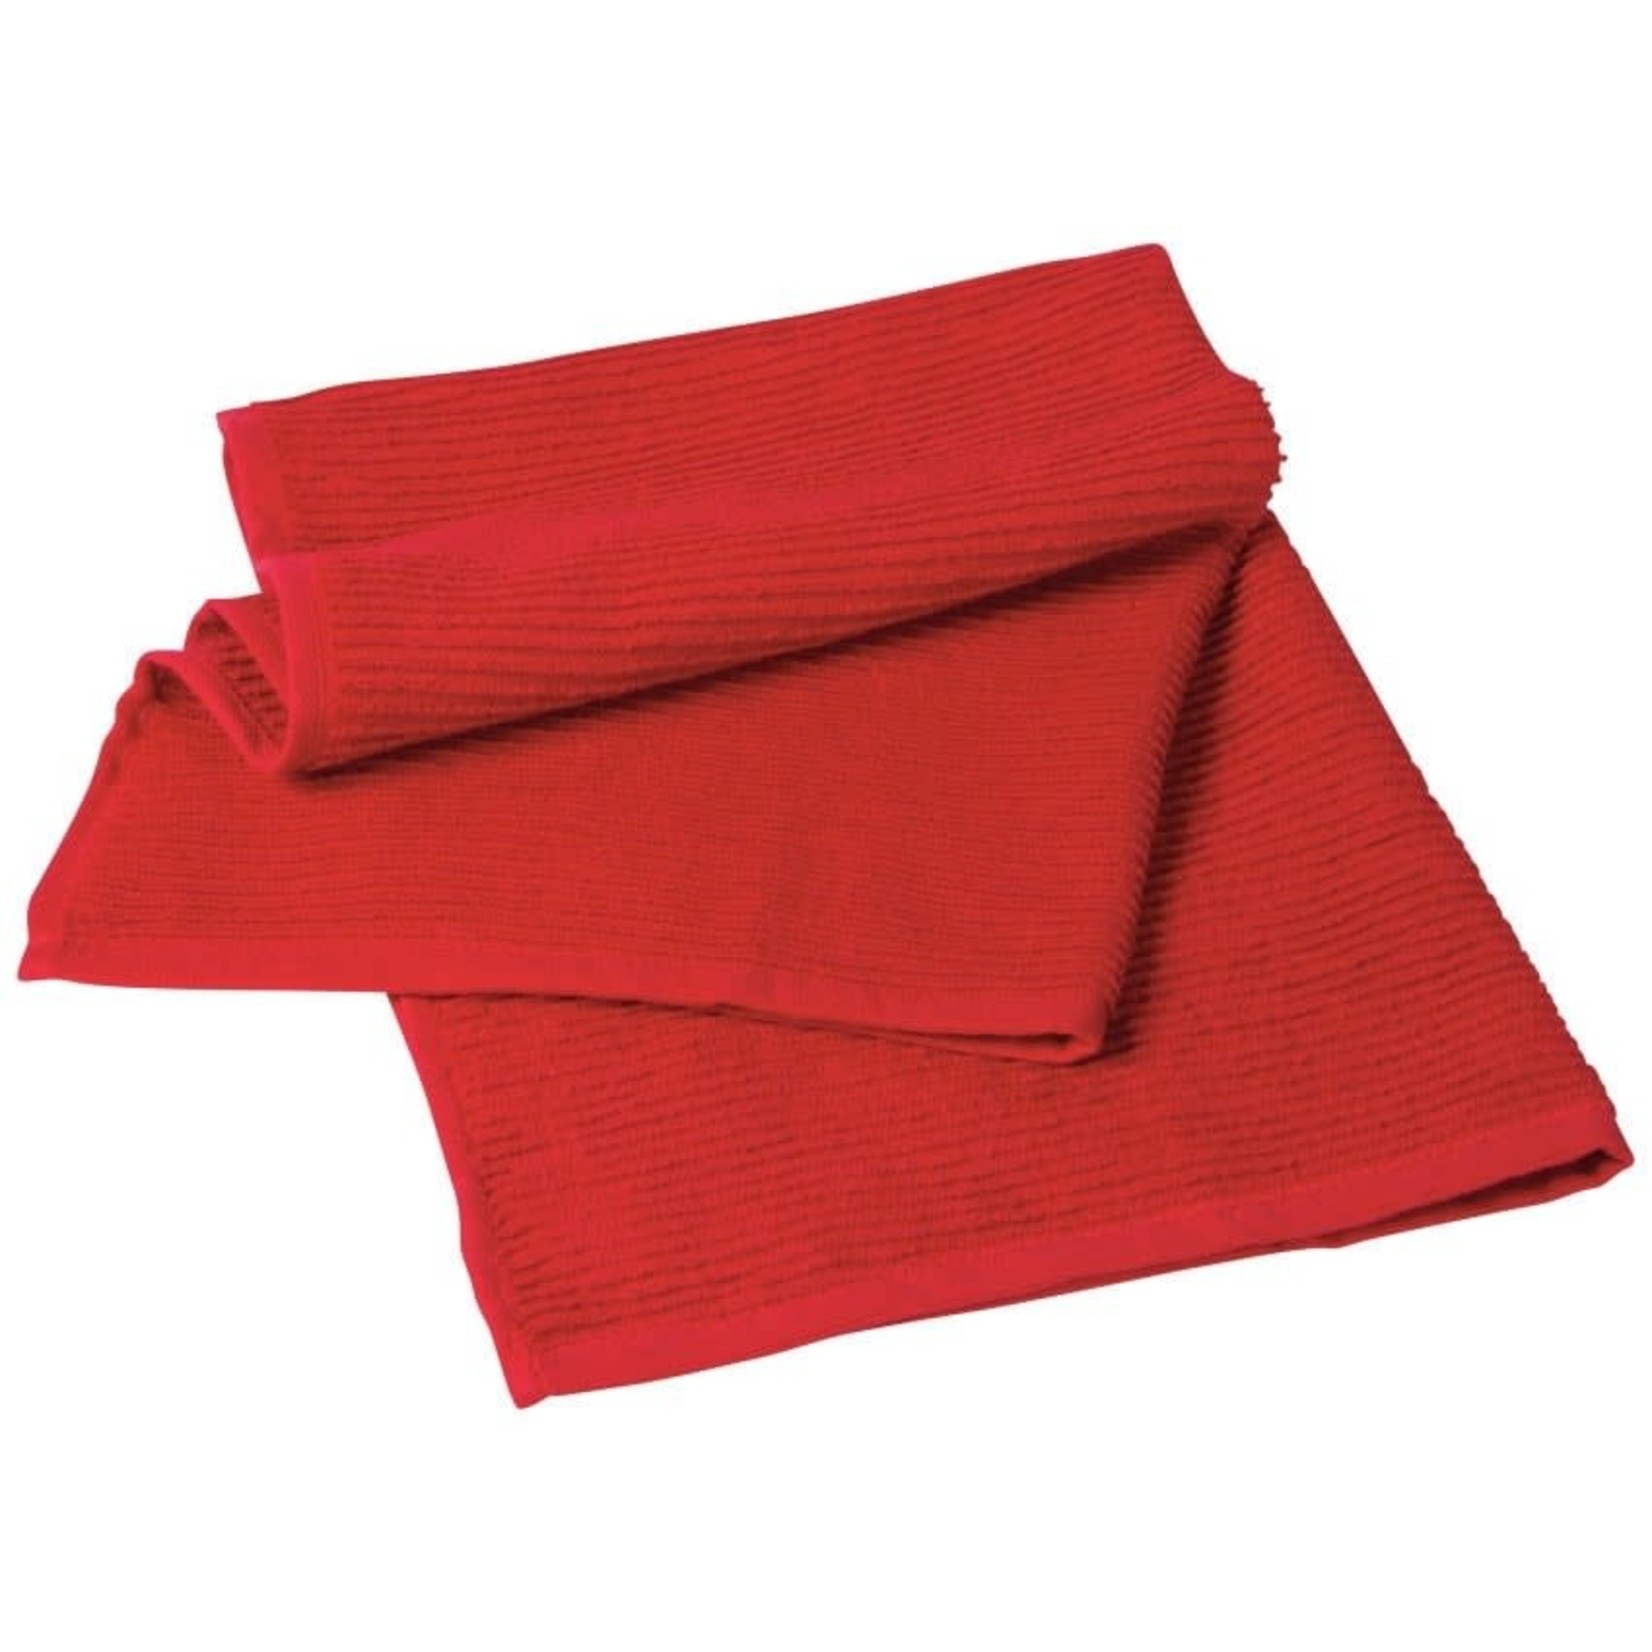 NOW DESIGNS NOW DESIGNS Ripple Tea Towel - Red